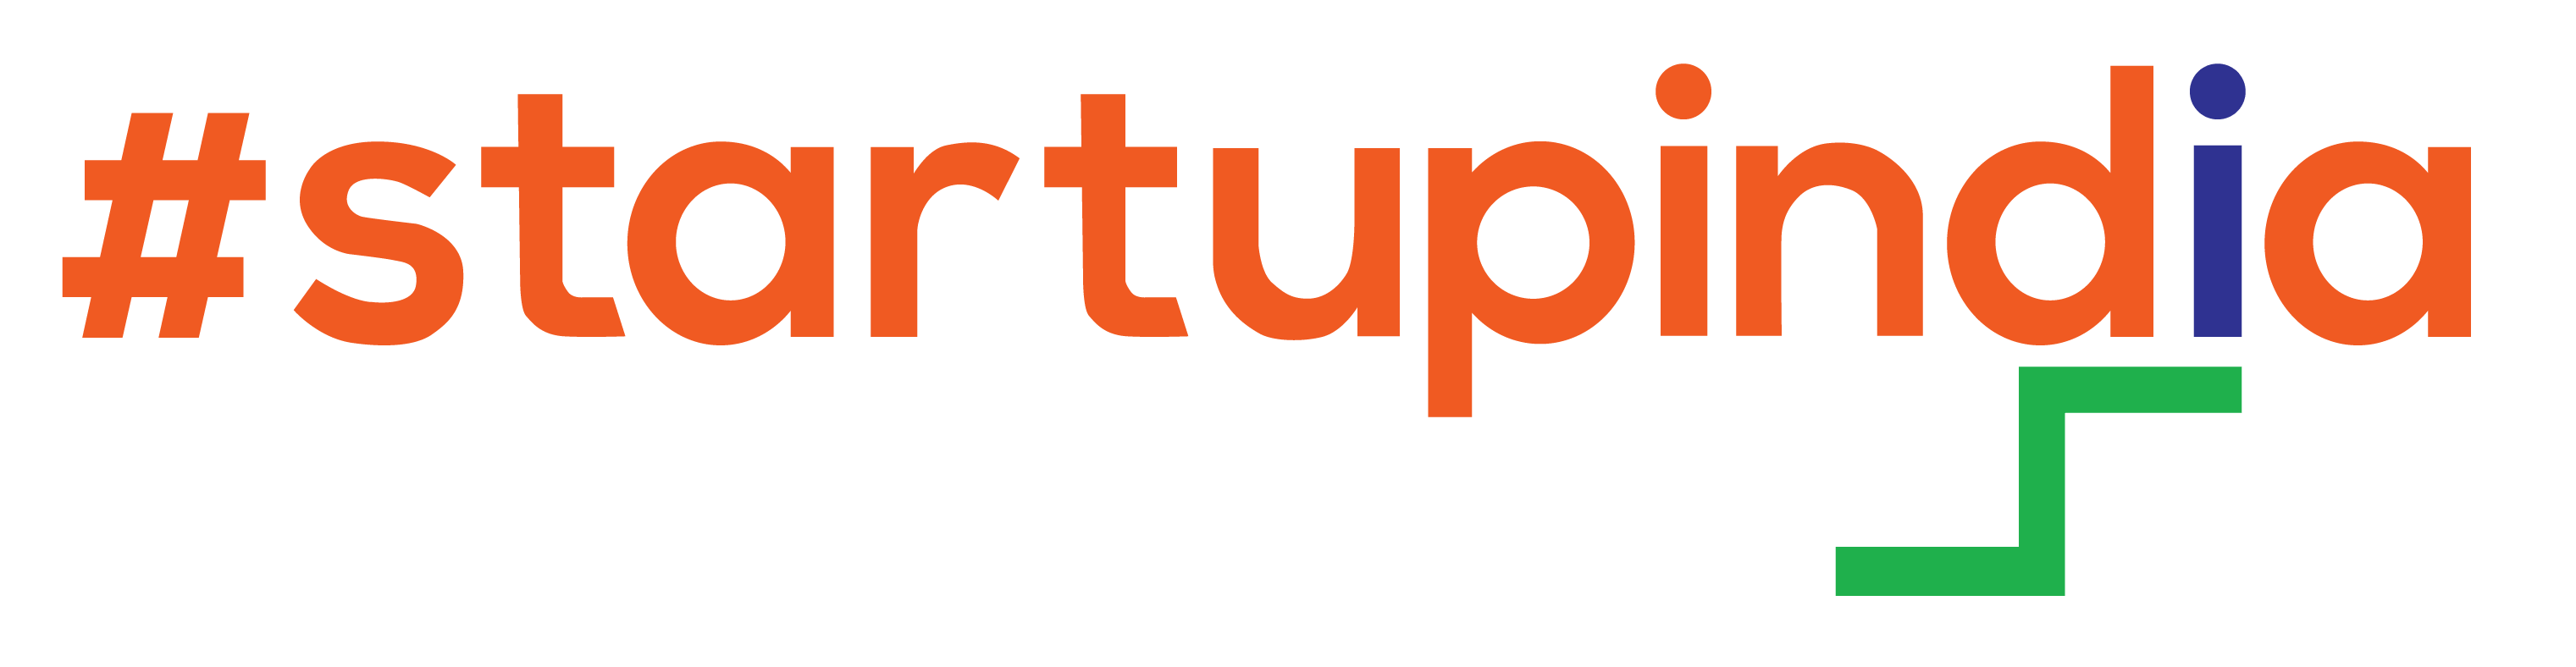 startupindia Logo Link 